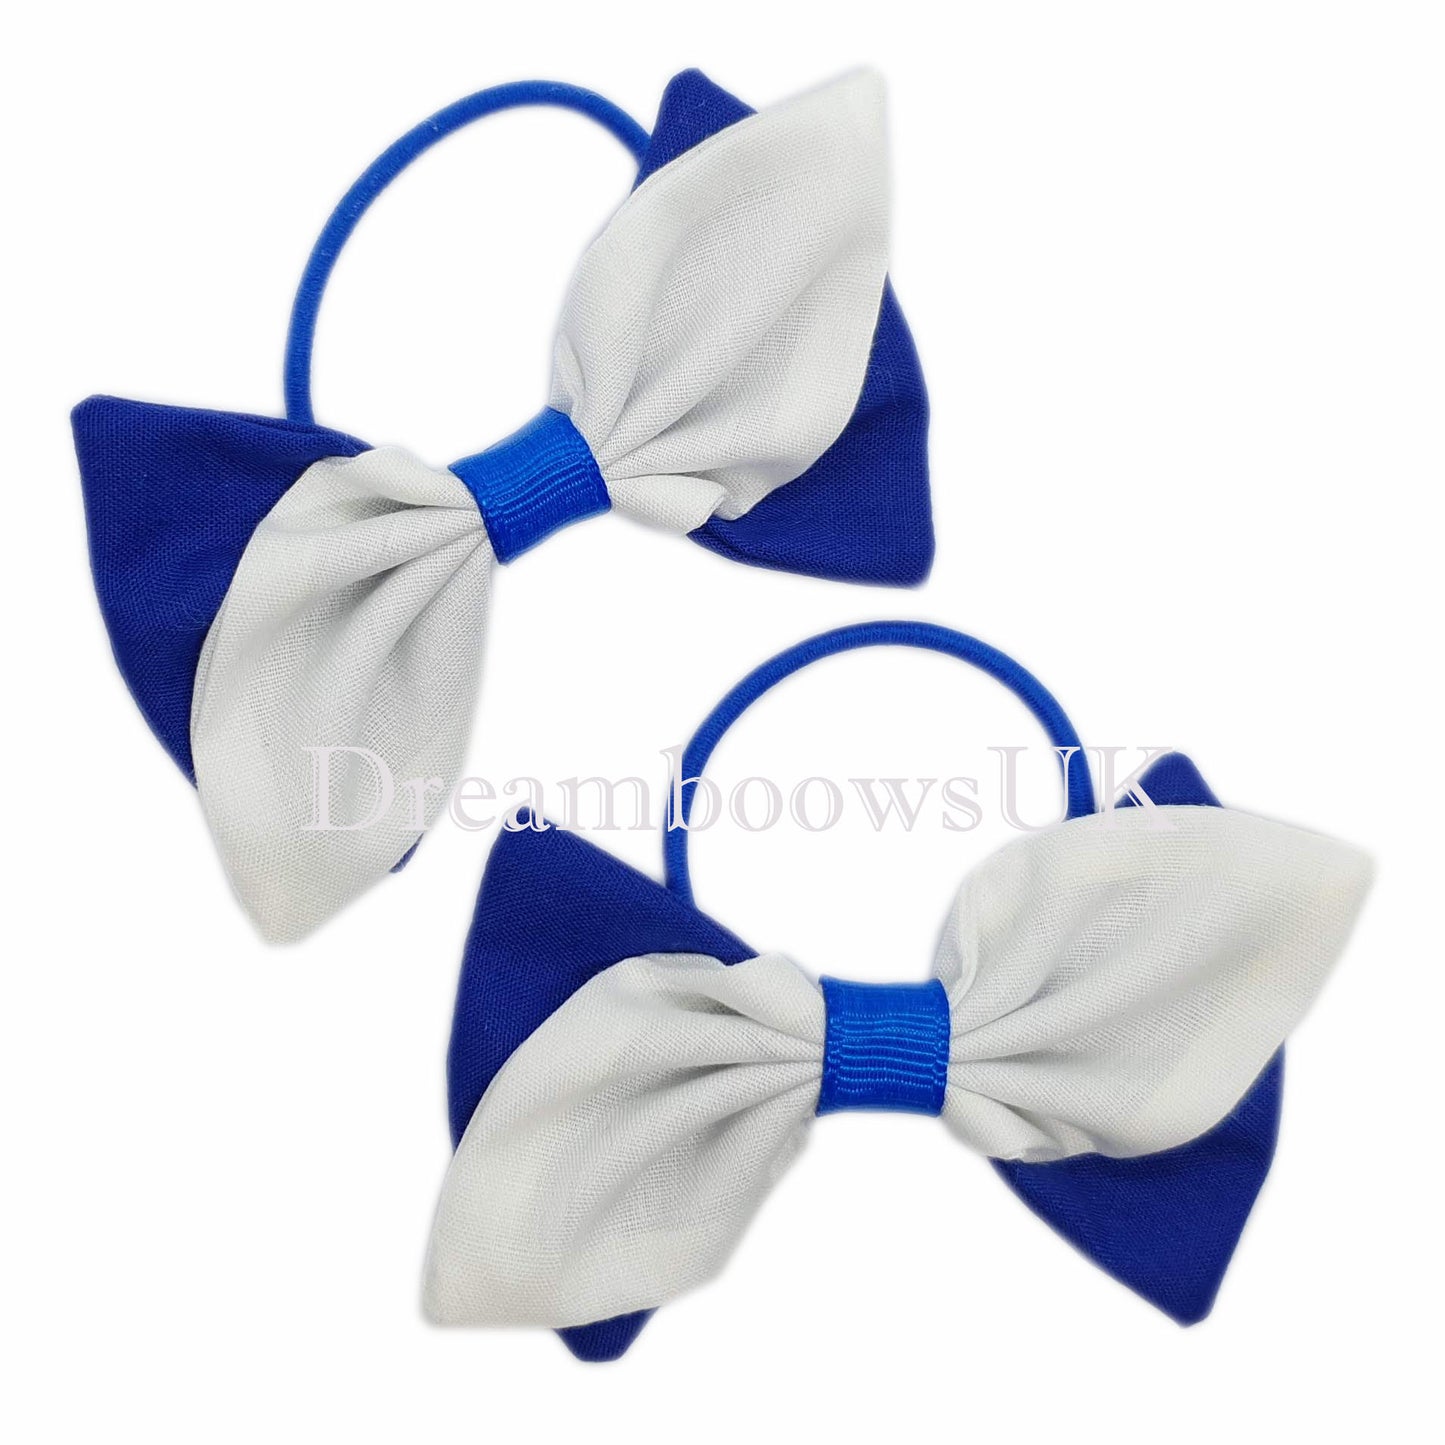 2x Royal blue and white fabric hair bows